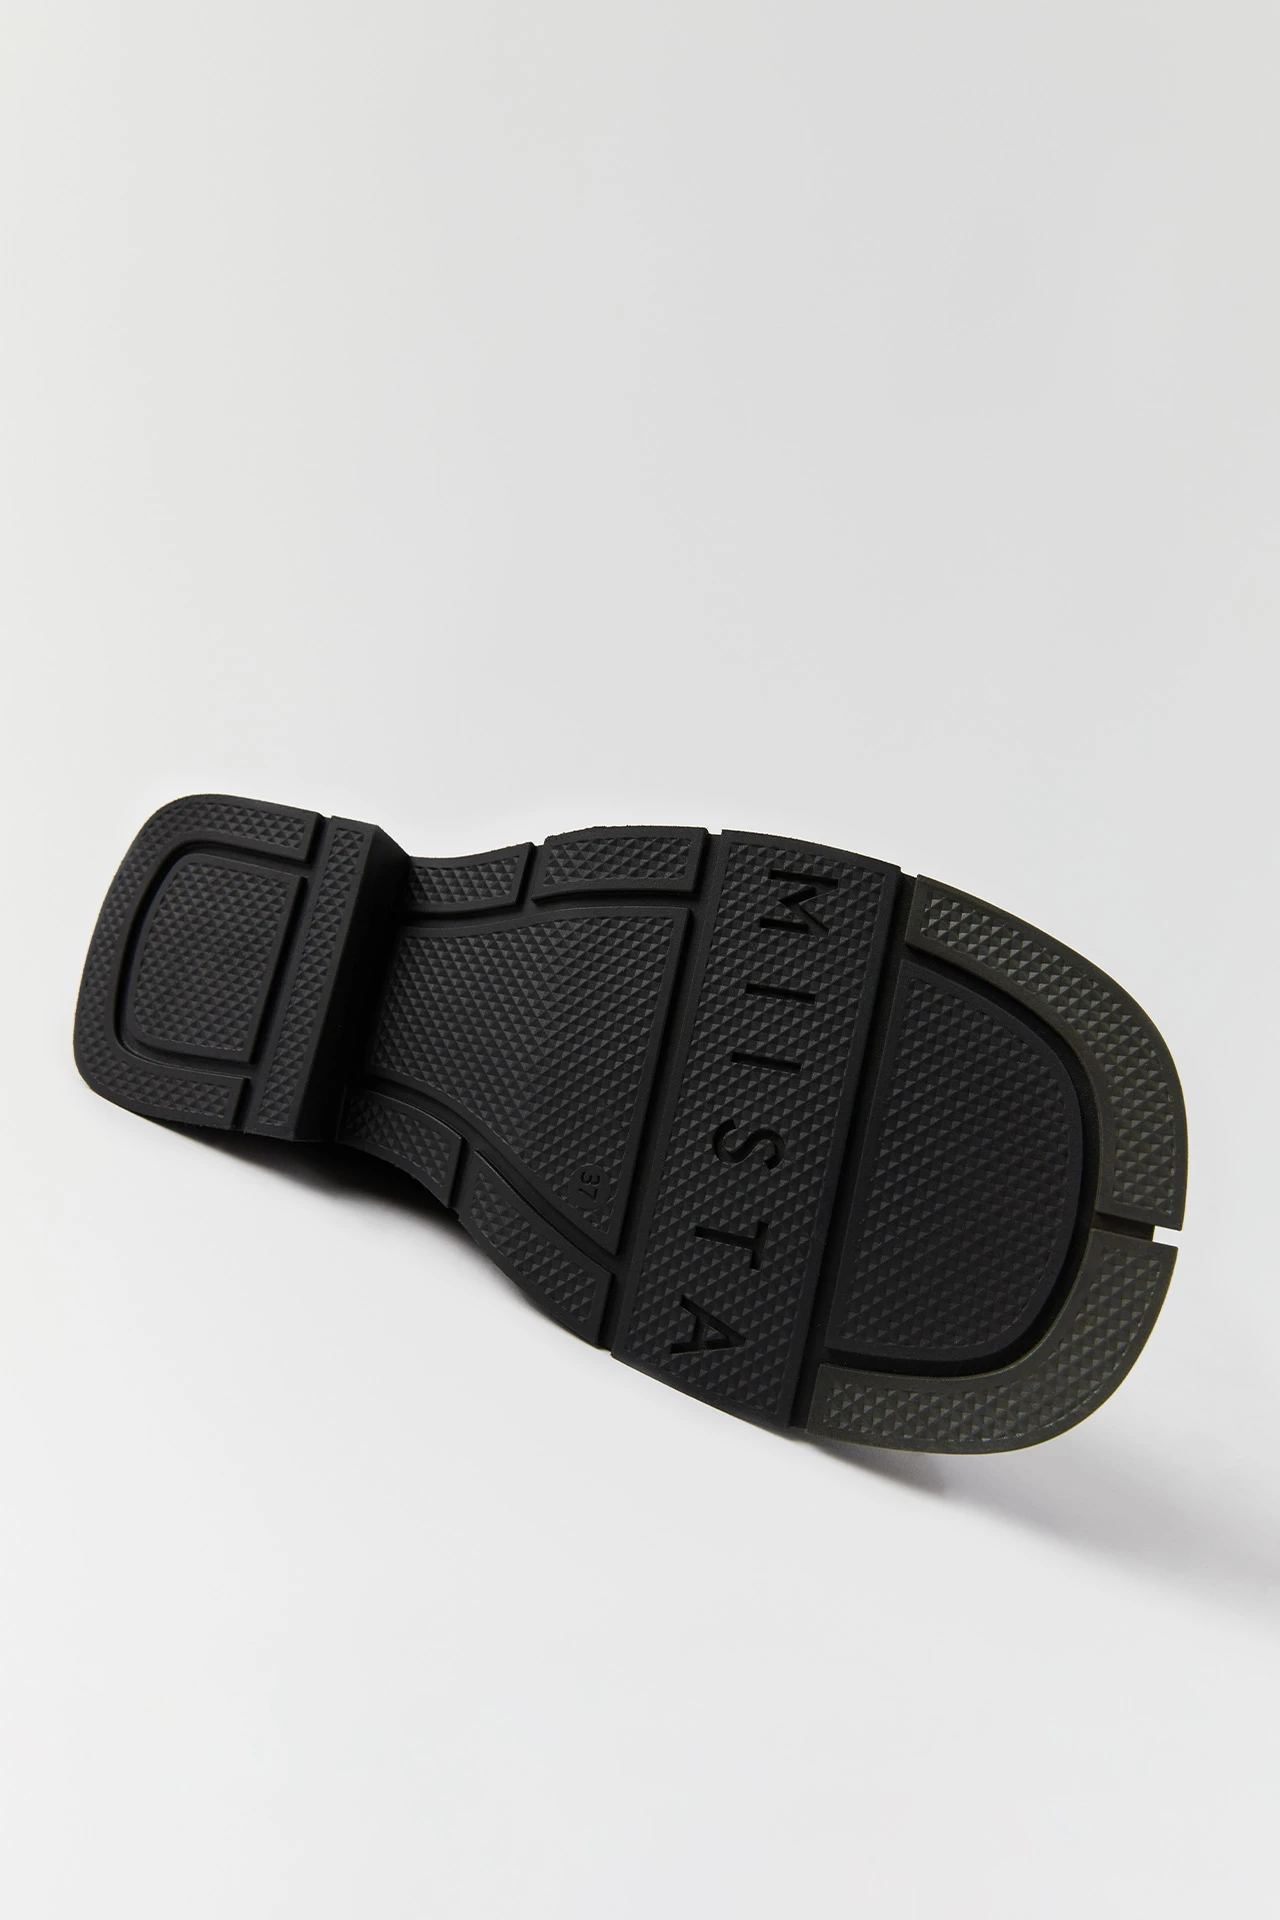 miista-kaya-black-ankle-boots-06